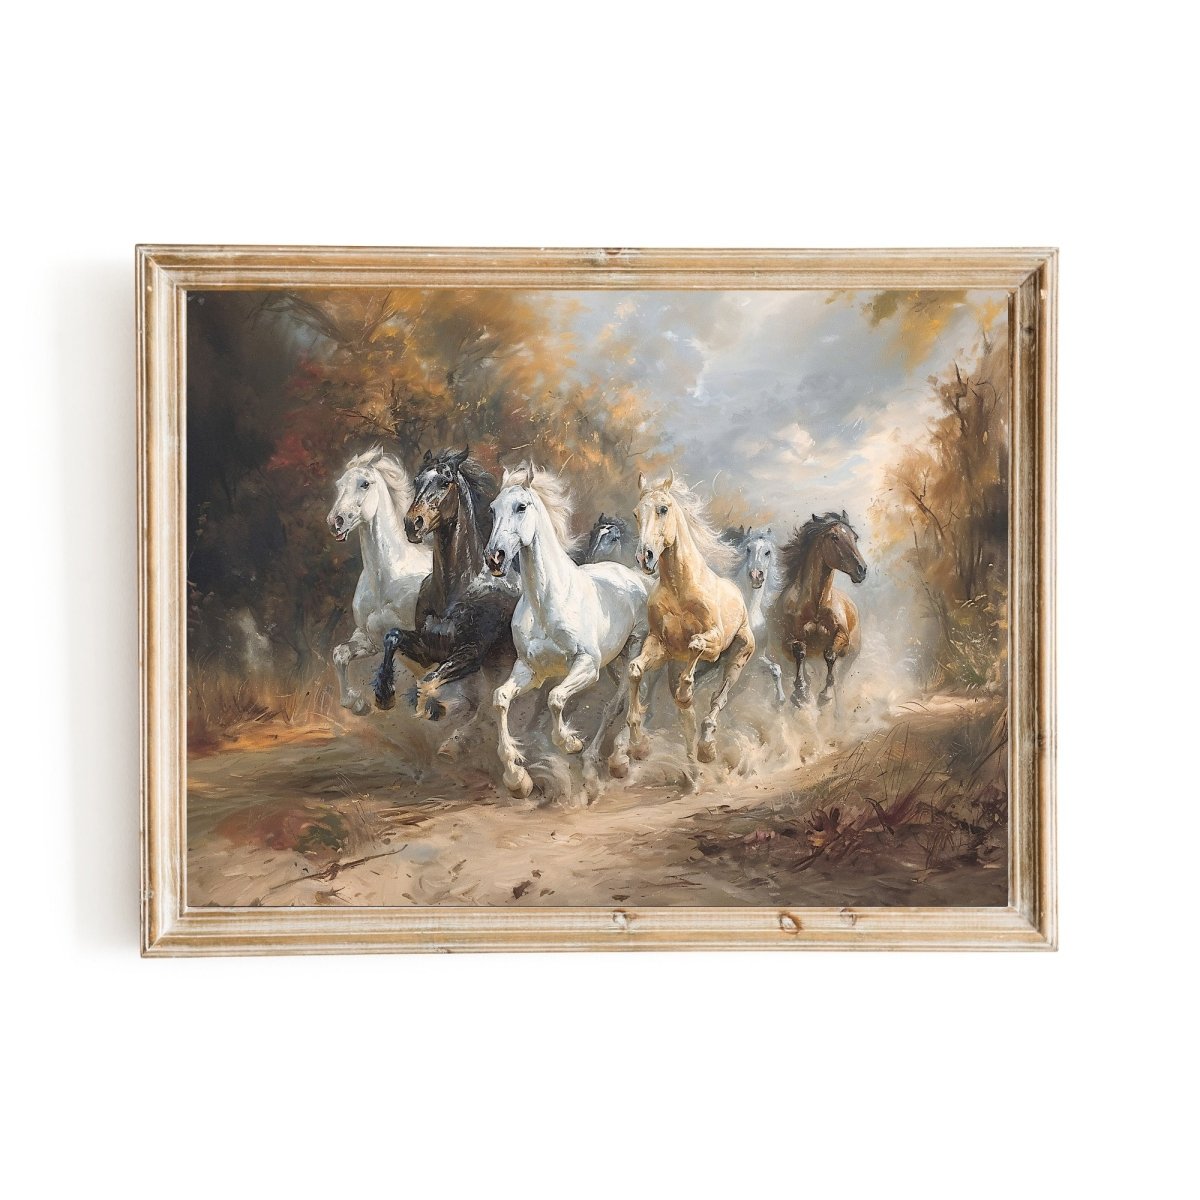 Vintage Horse Run Wall Art Print - Western Wall Decor - Everything Pixel